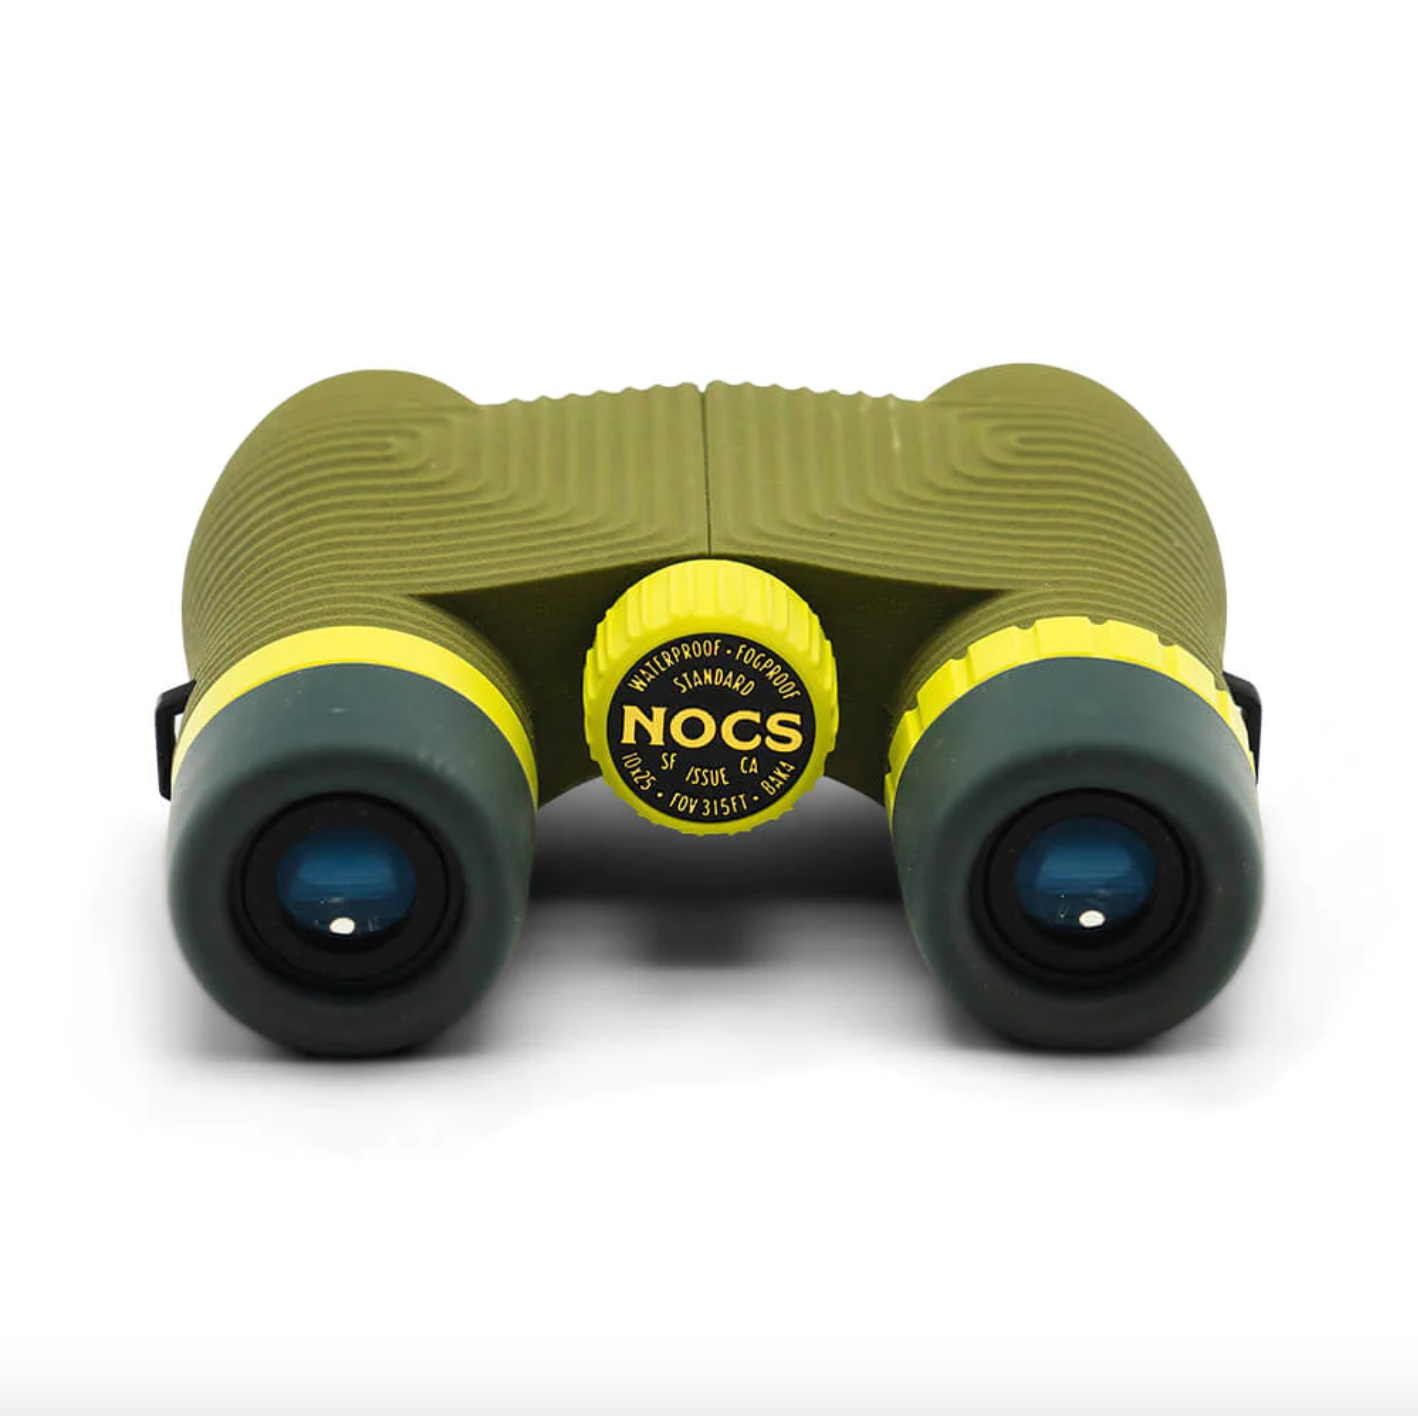 Nocs Standard Issue Waterproof Binoculars